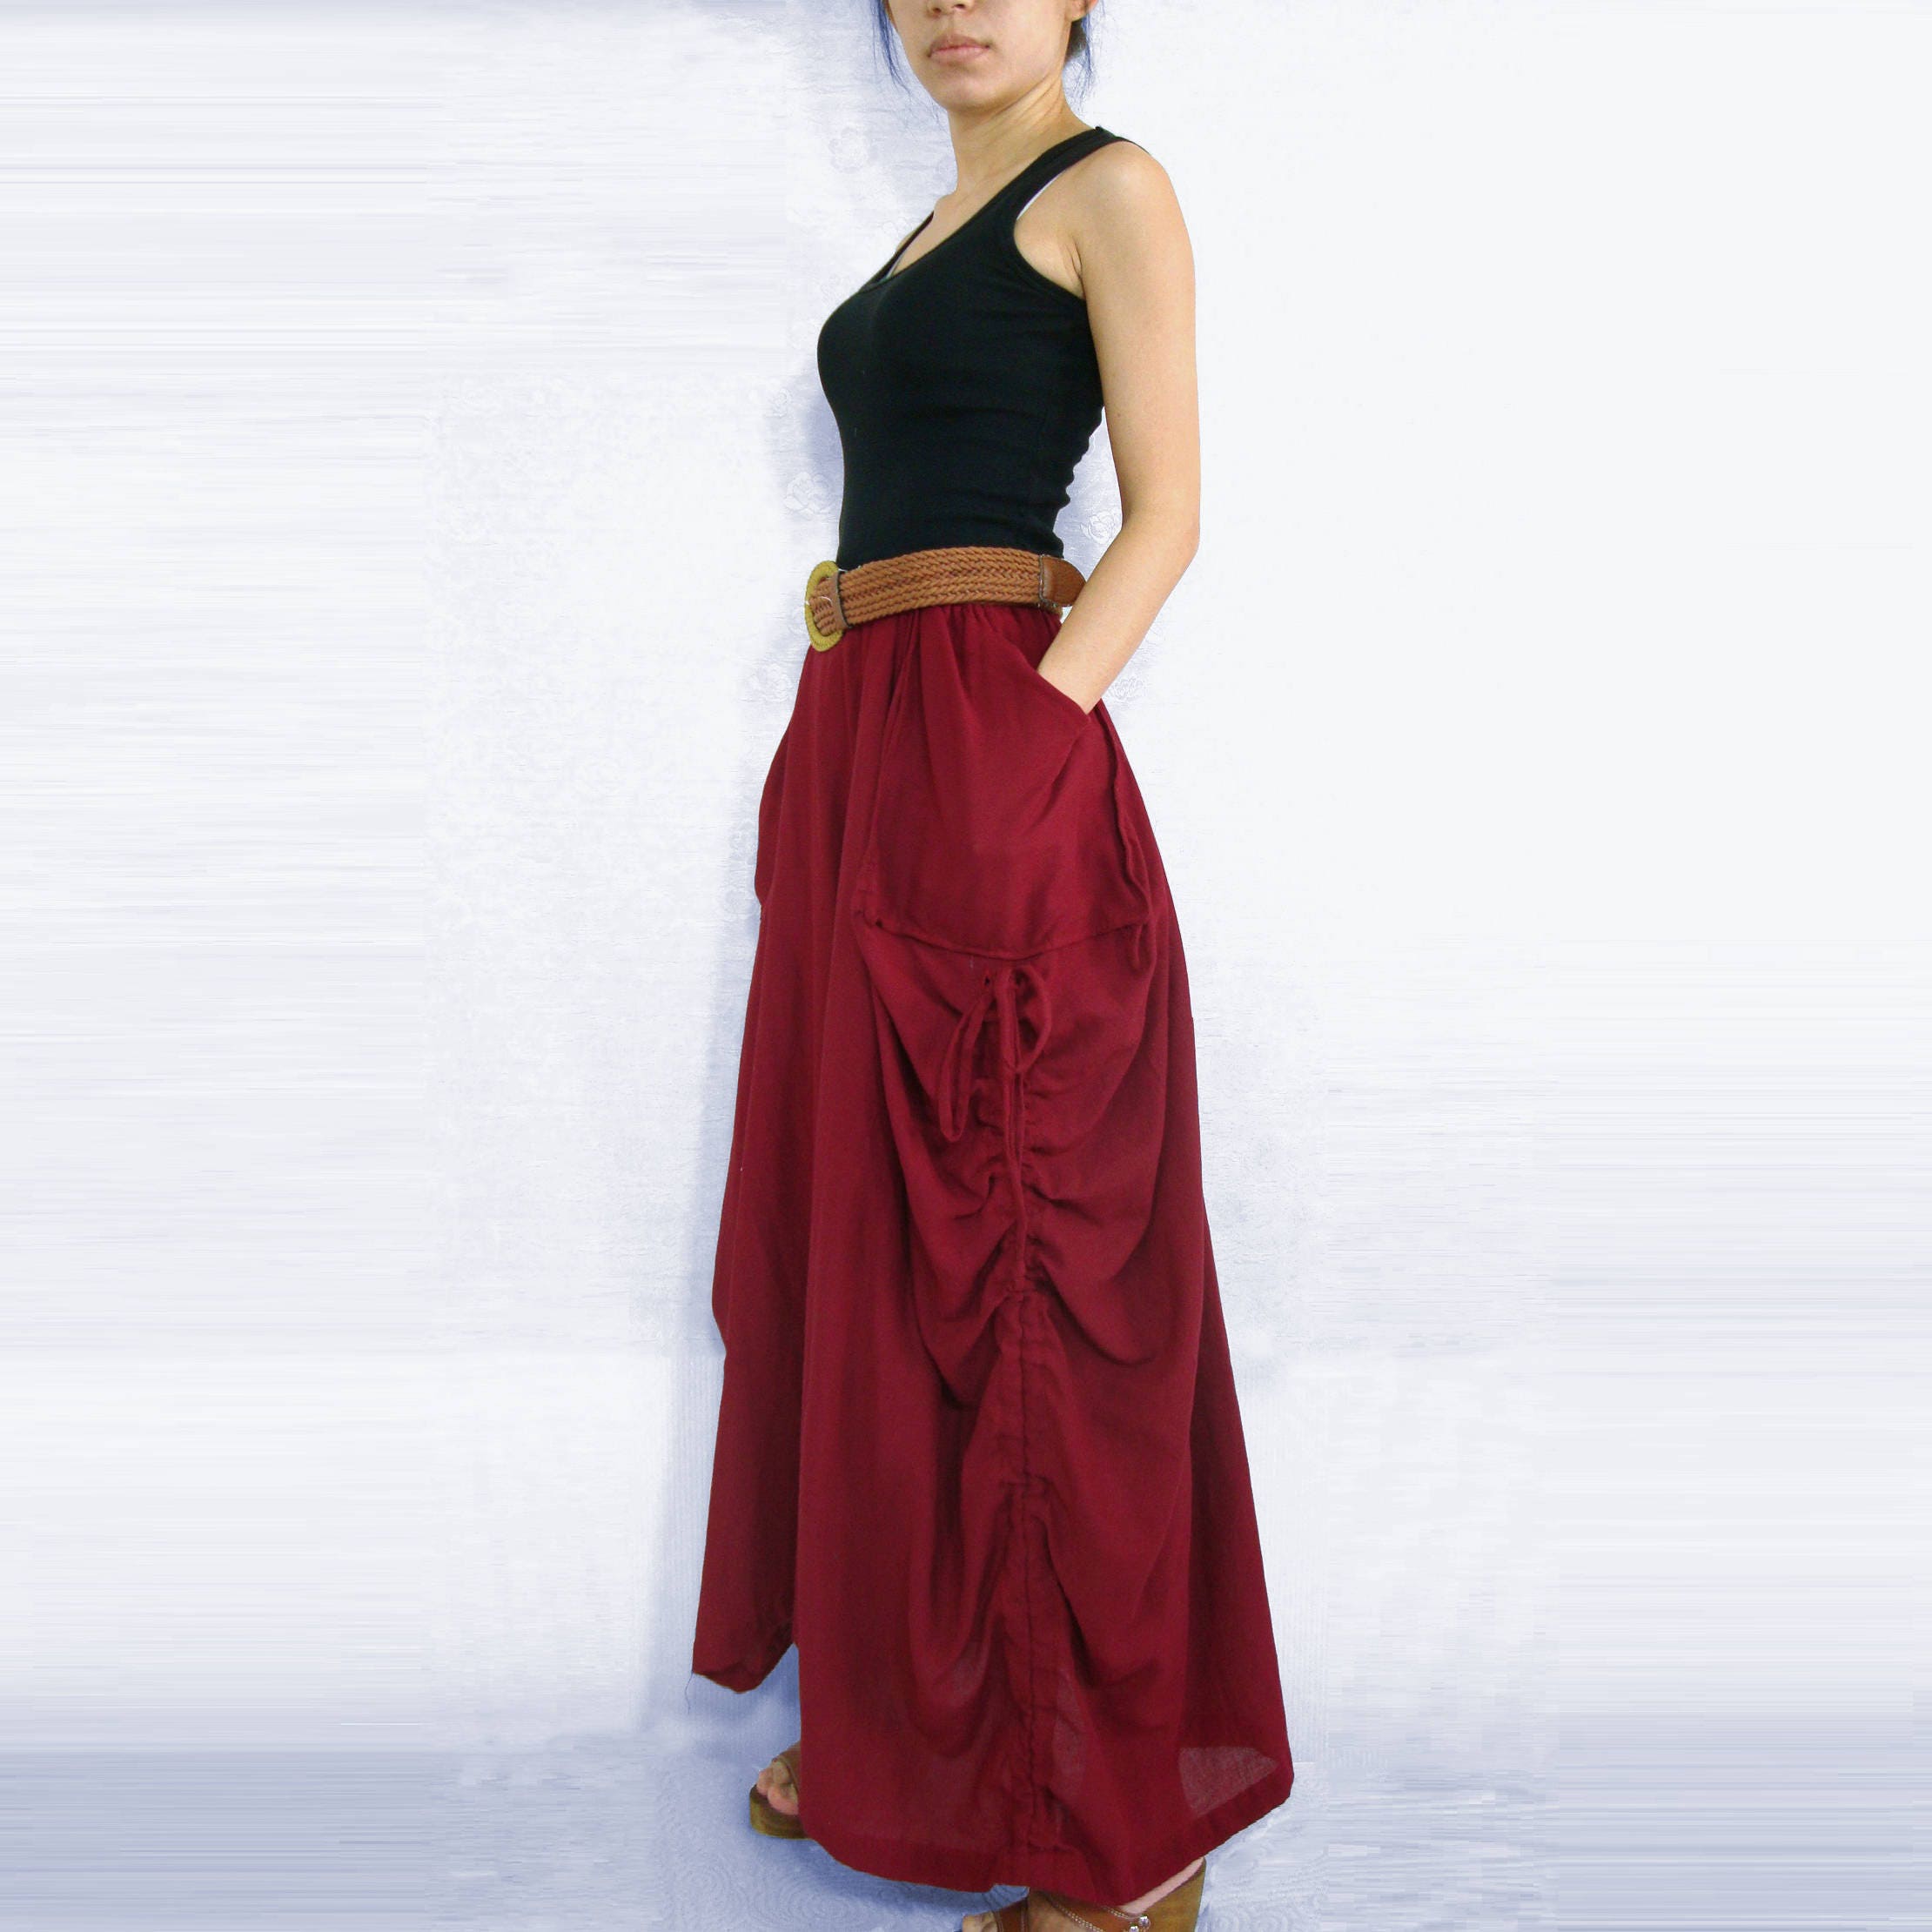 Lagenlook Maxi Skirt Big Pockets Long Skirt in Red Cotton | Etsy